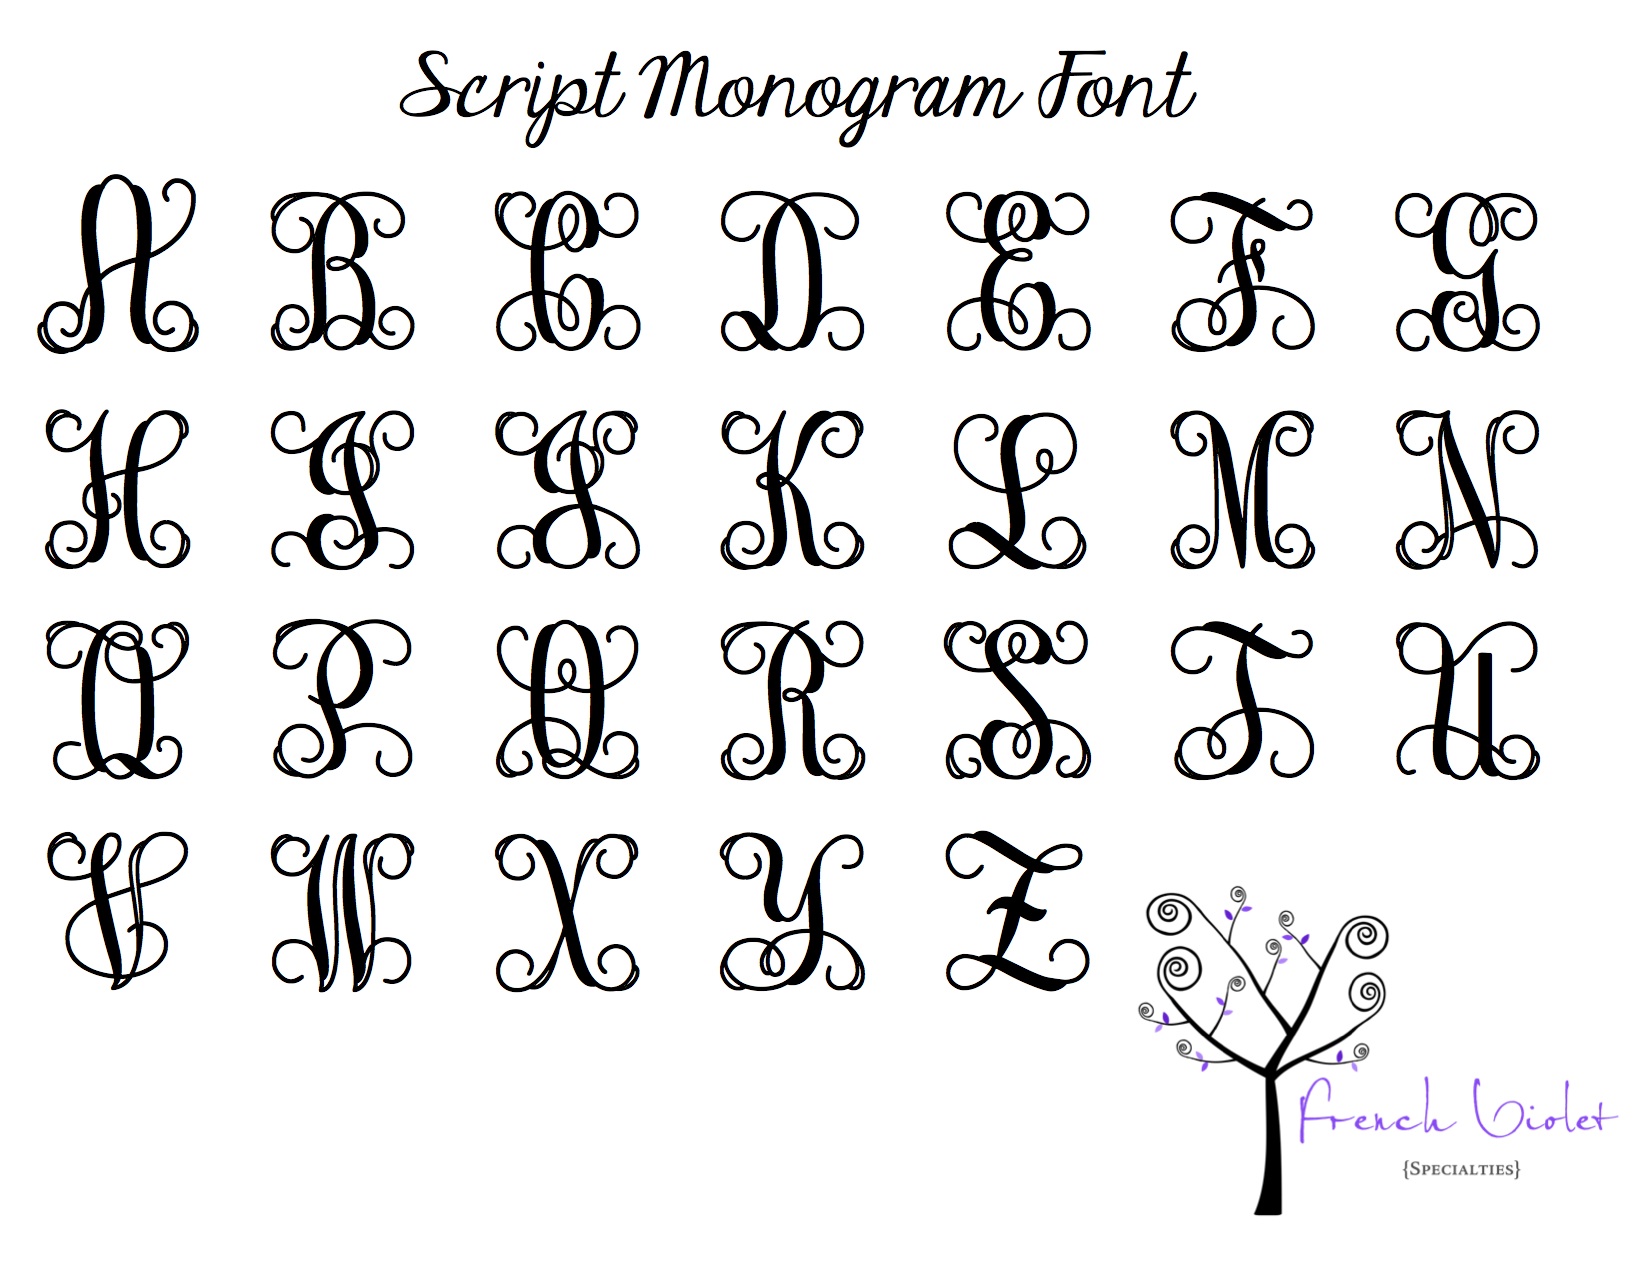 8 Initials Monogram Script Font Images